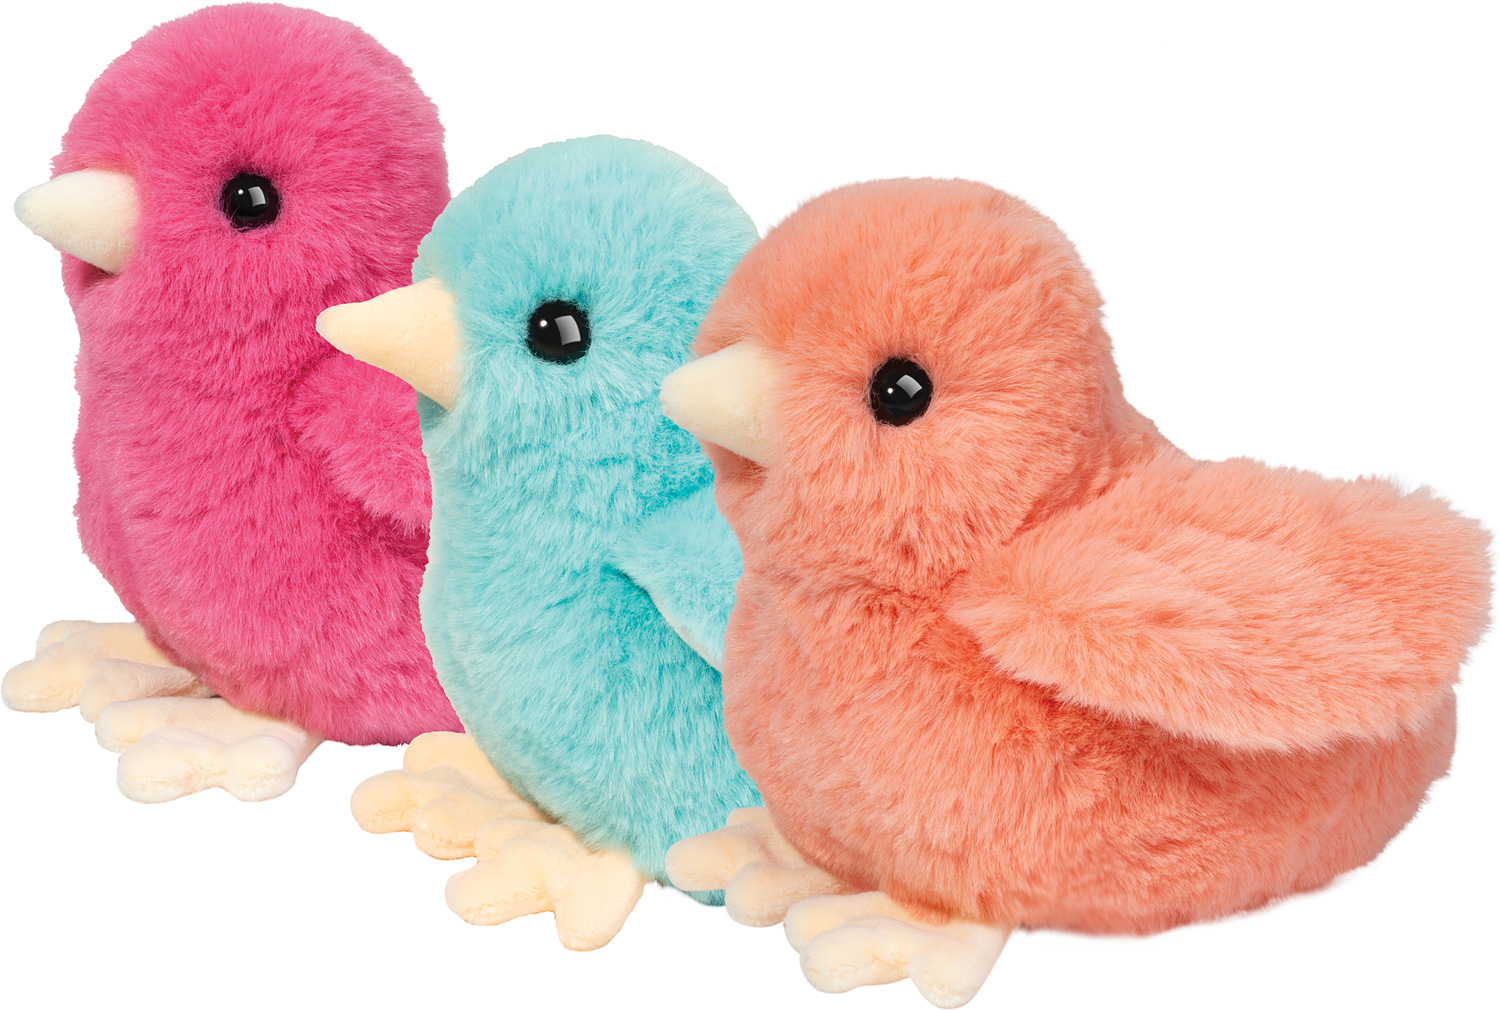 Colorful Chicks - Melon